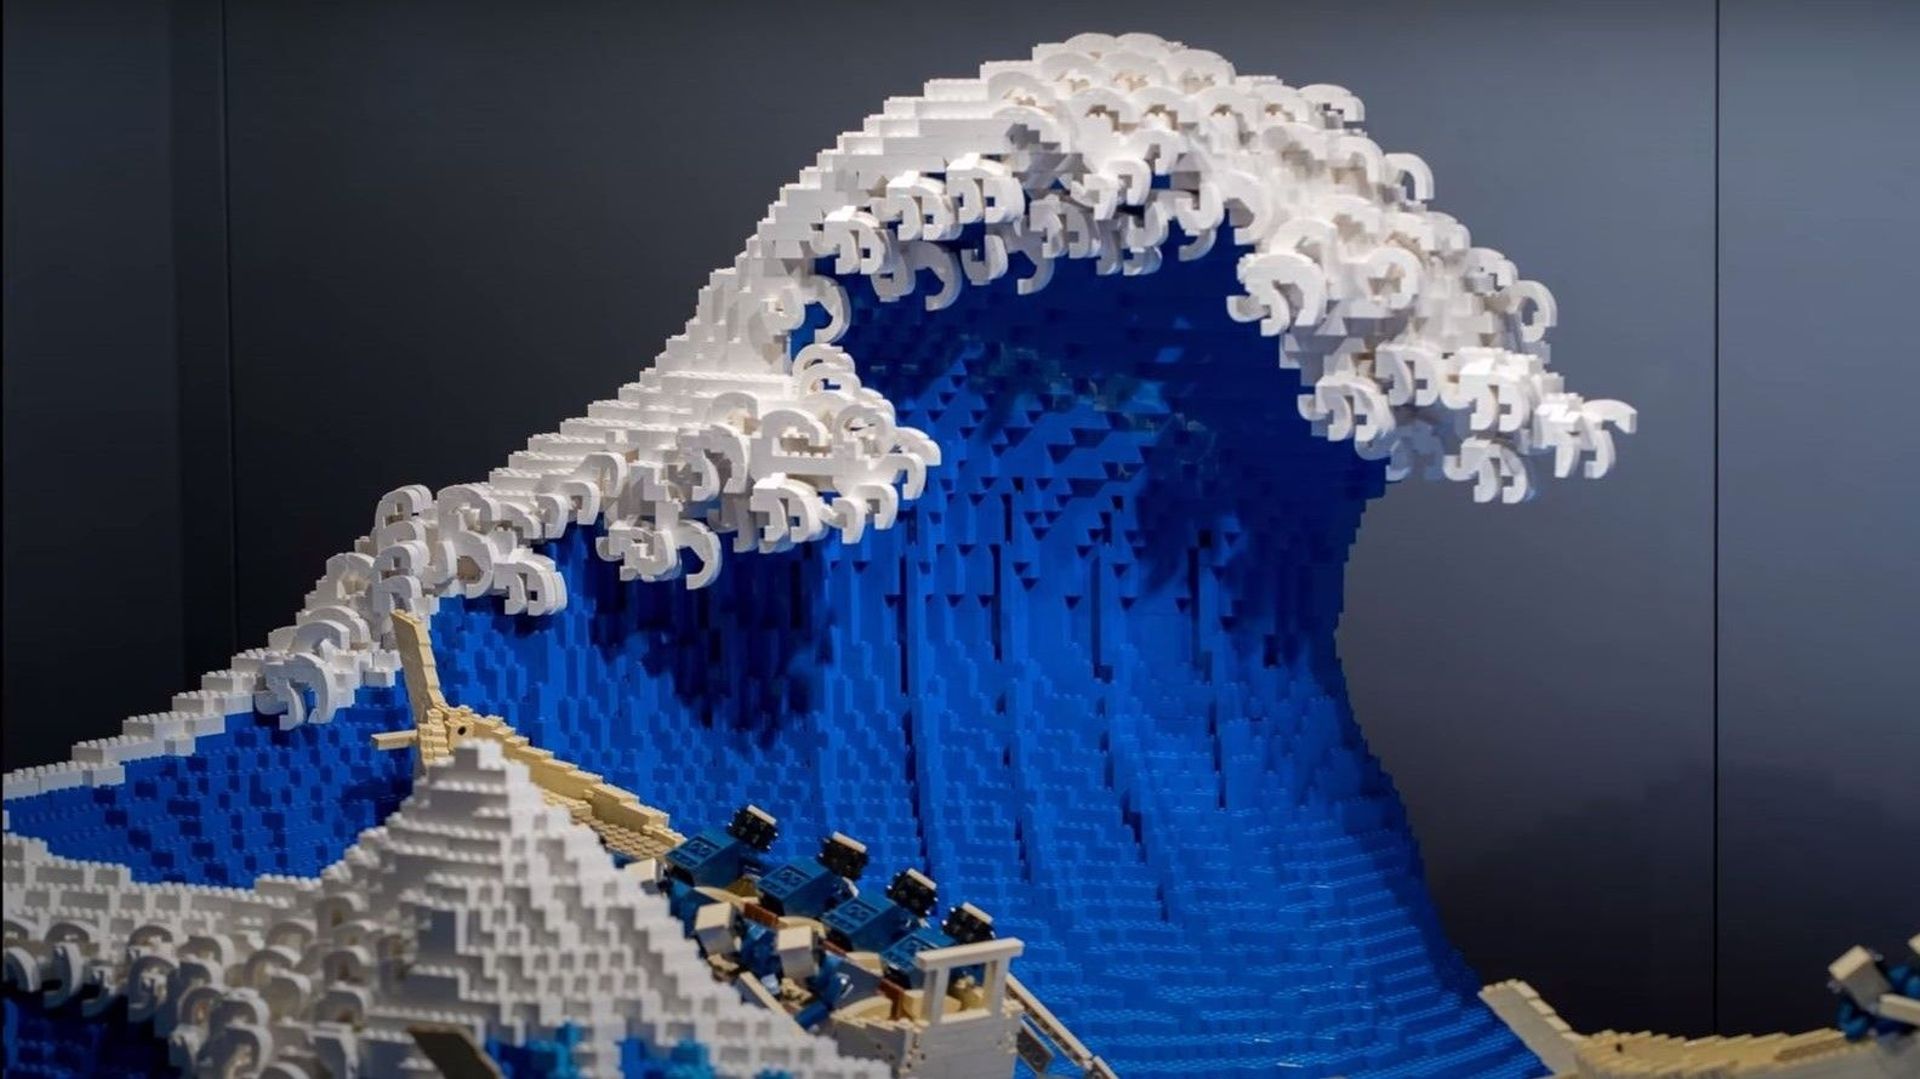 Il reconstitue 'la grande vague' d'Hokusai avec 50.000 briques Lego 